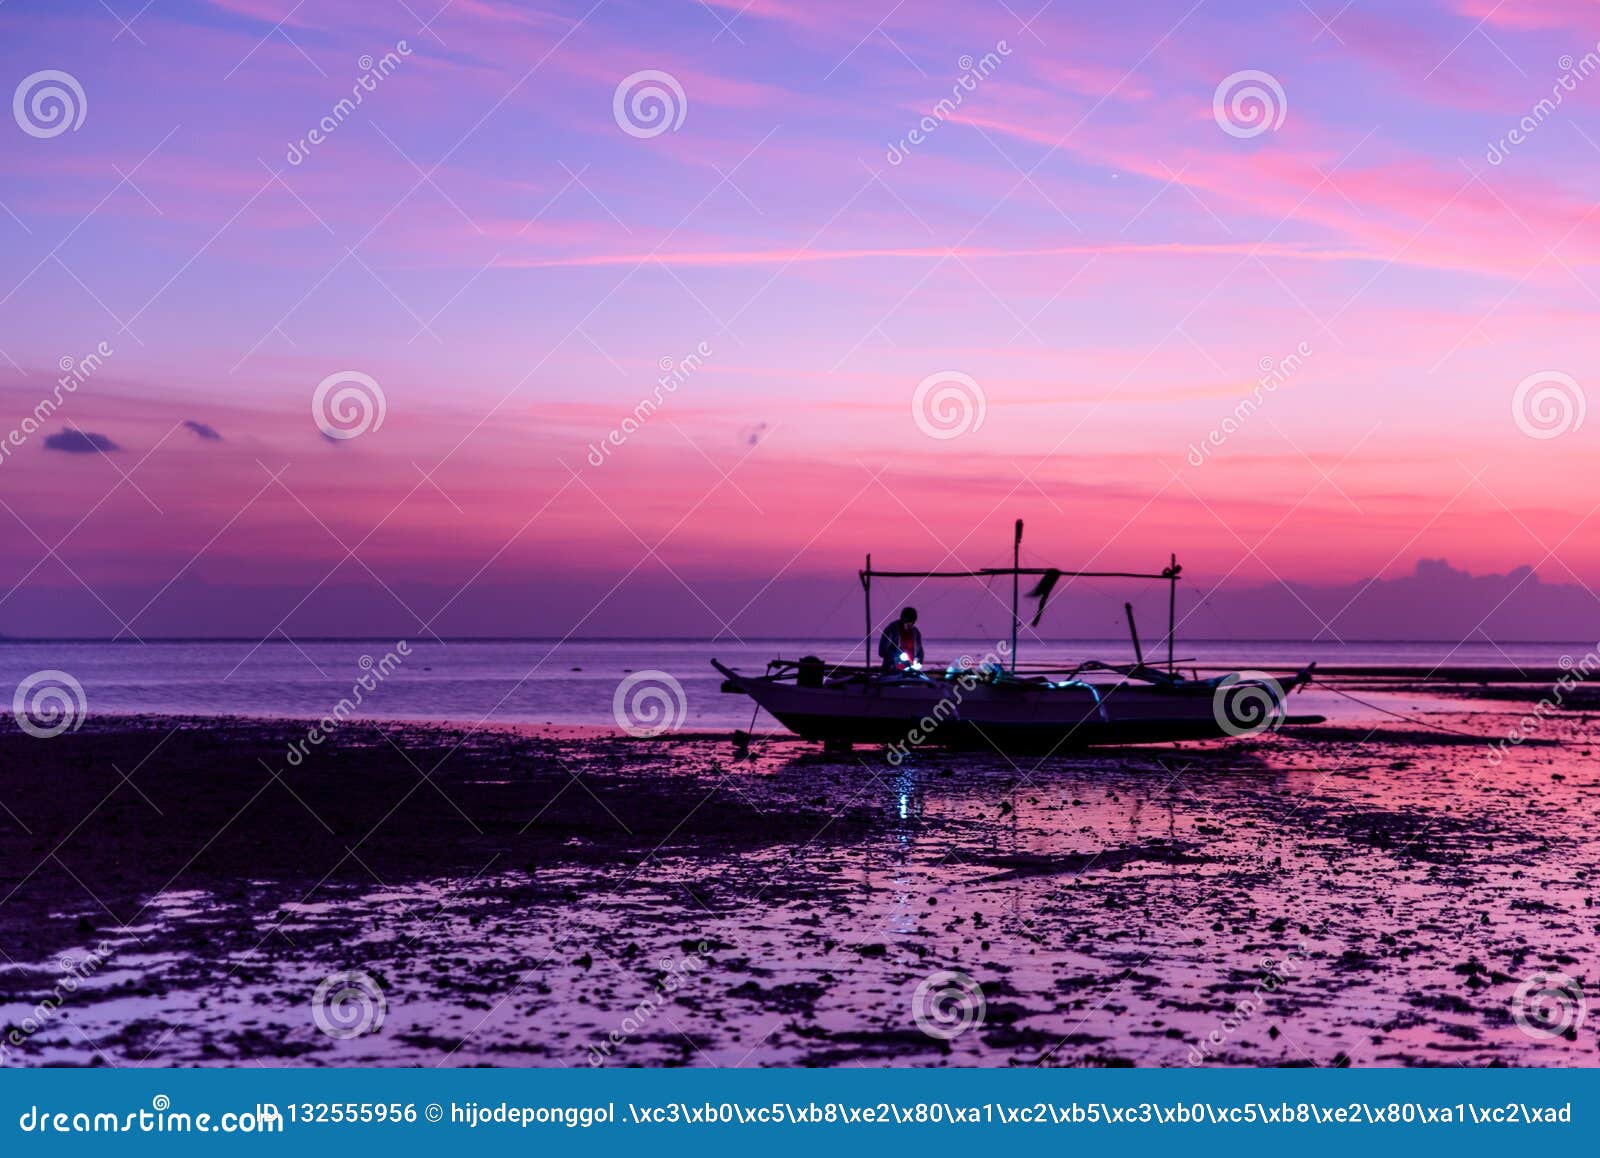 sunset at lakawon beach resort, cadiz, negros occidental, phlippines